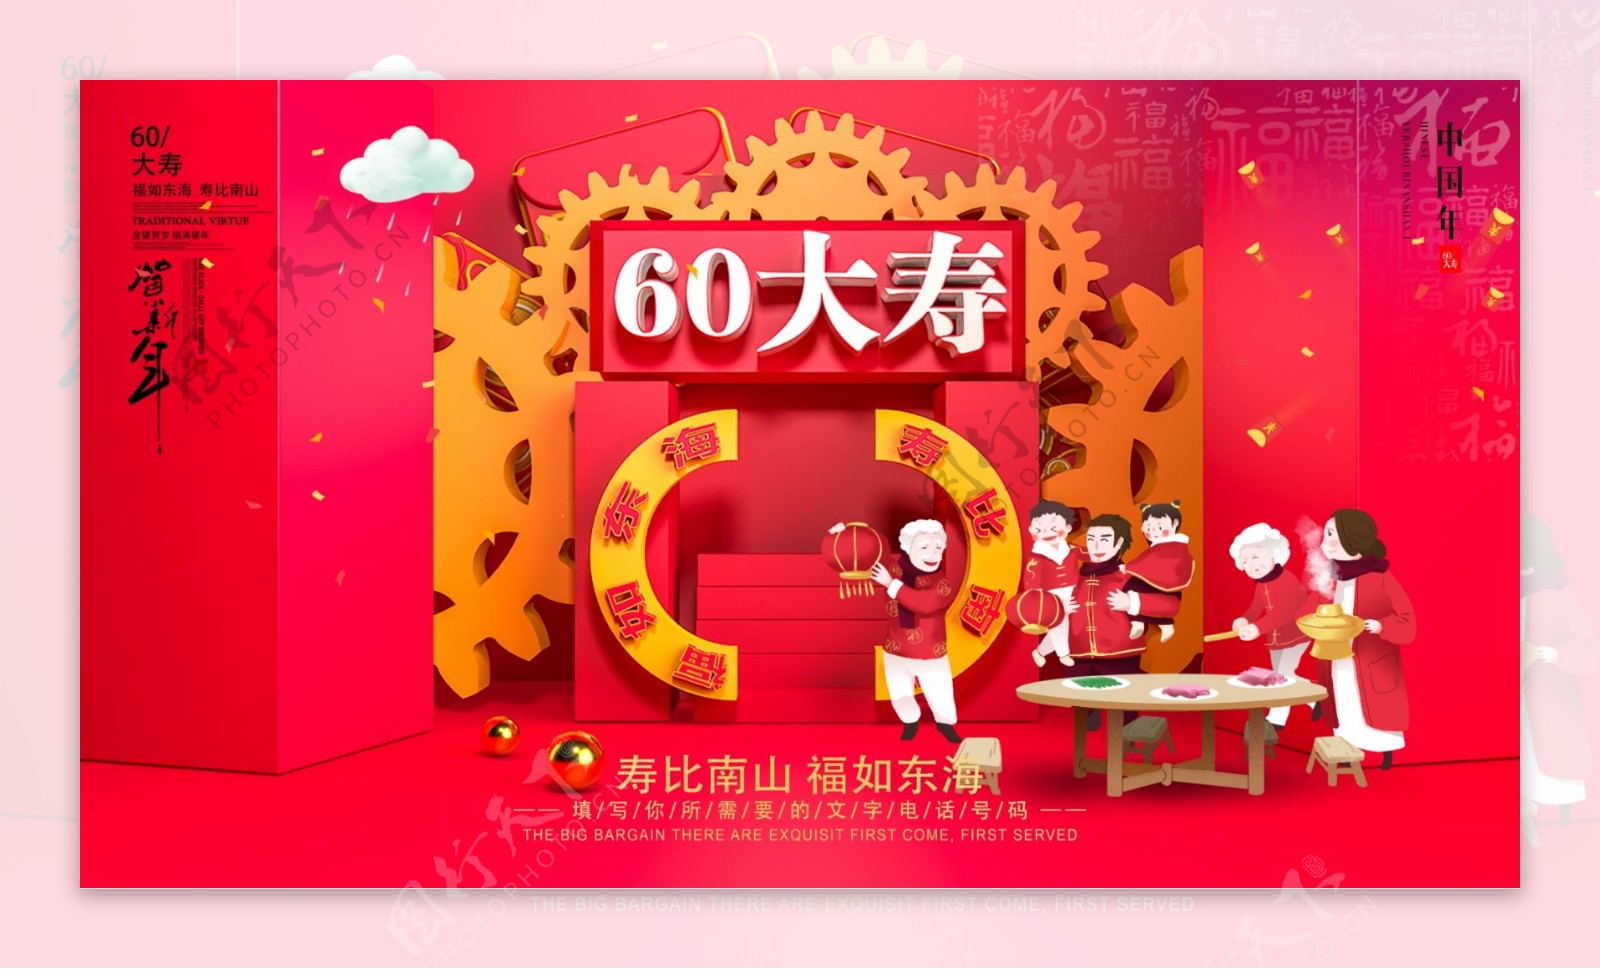 C4D红色喜庆寿宴海报60大寿祝福海报